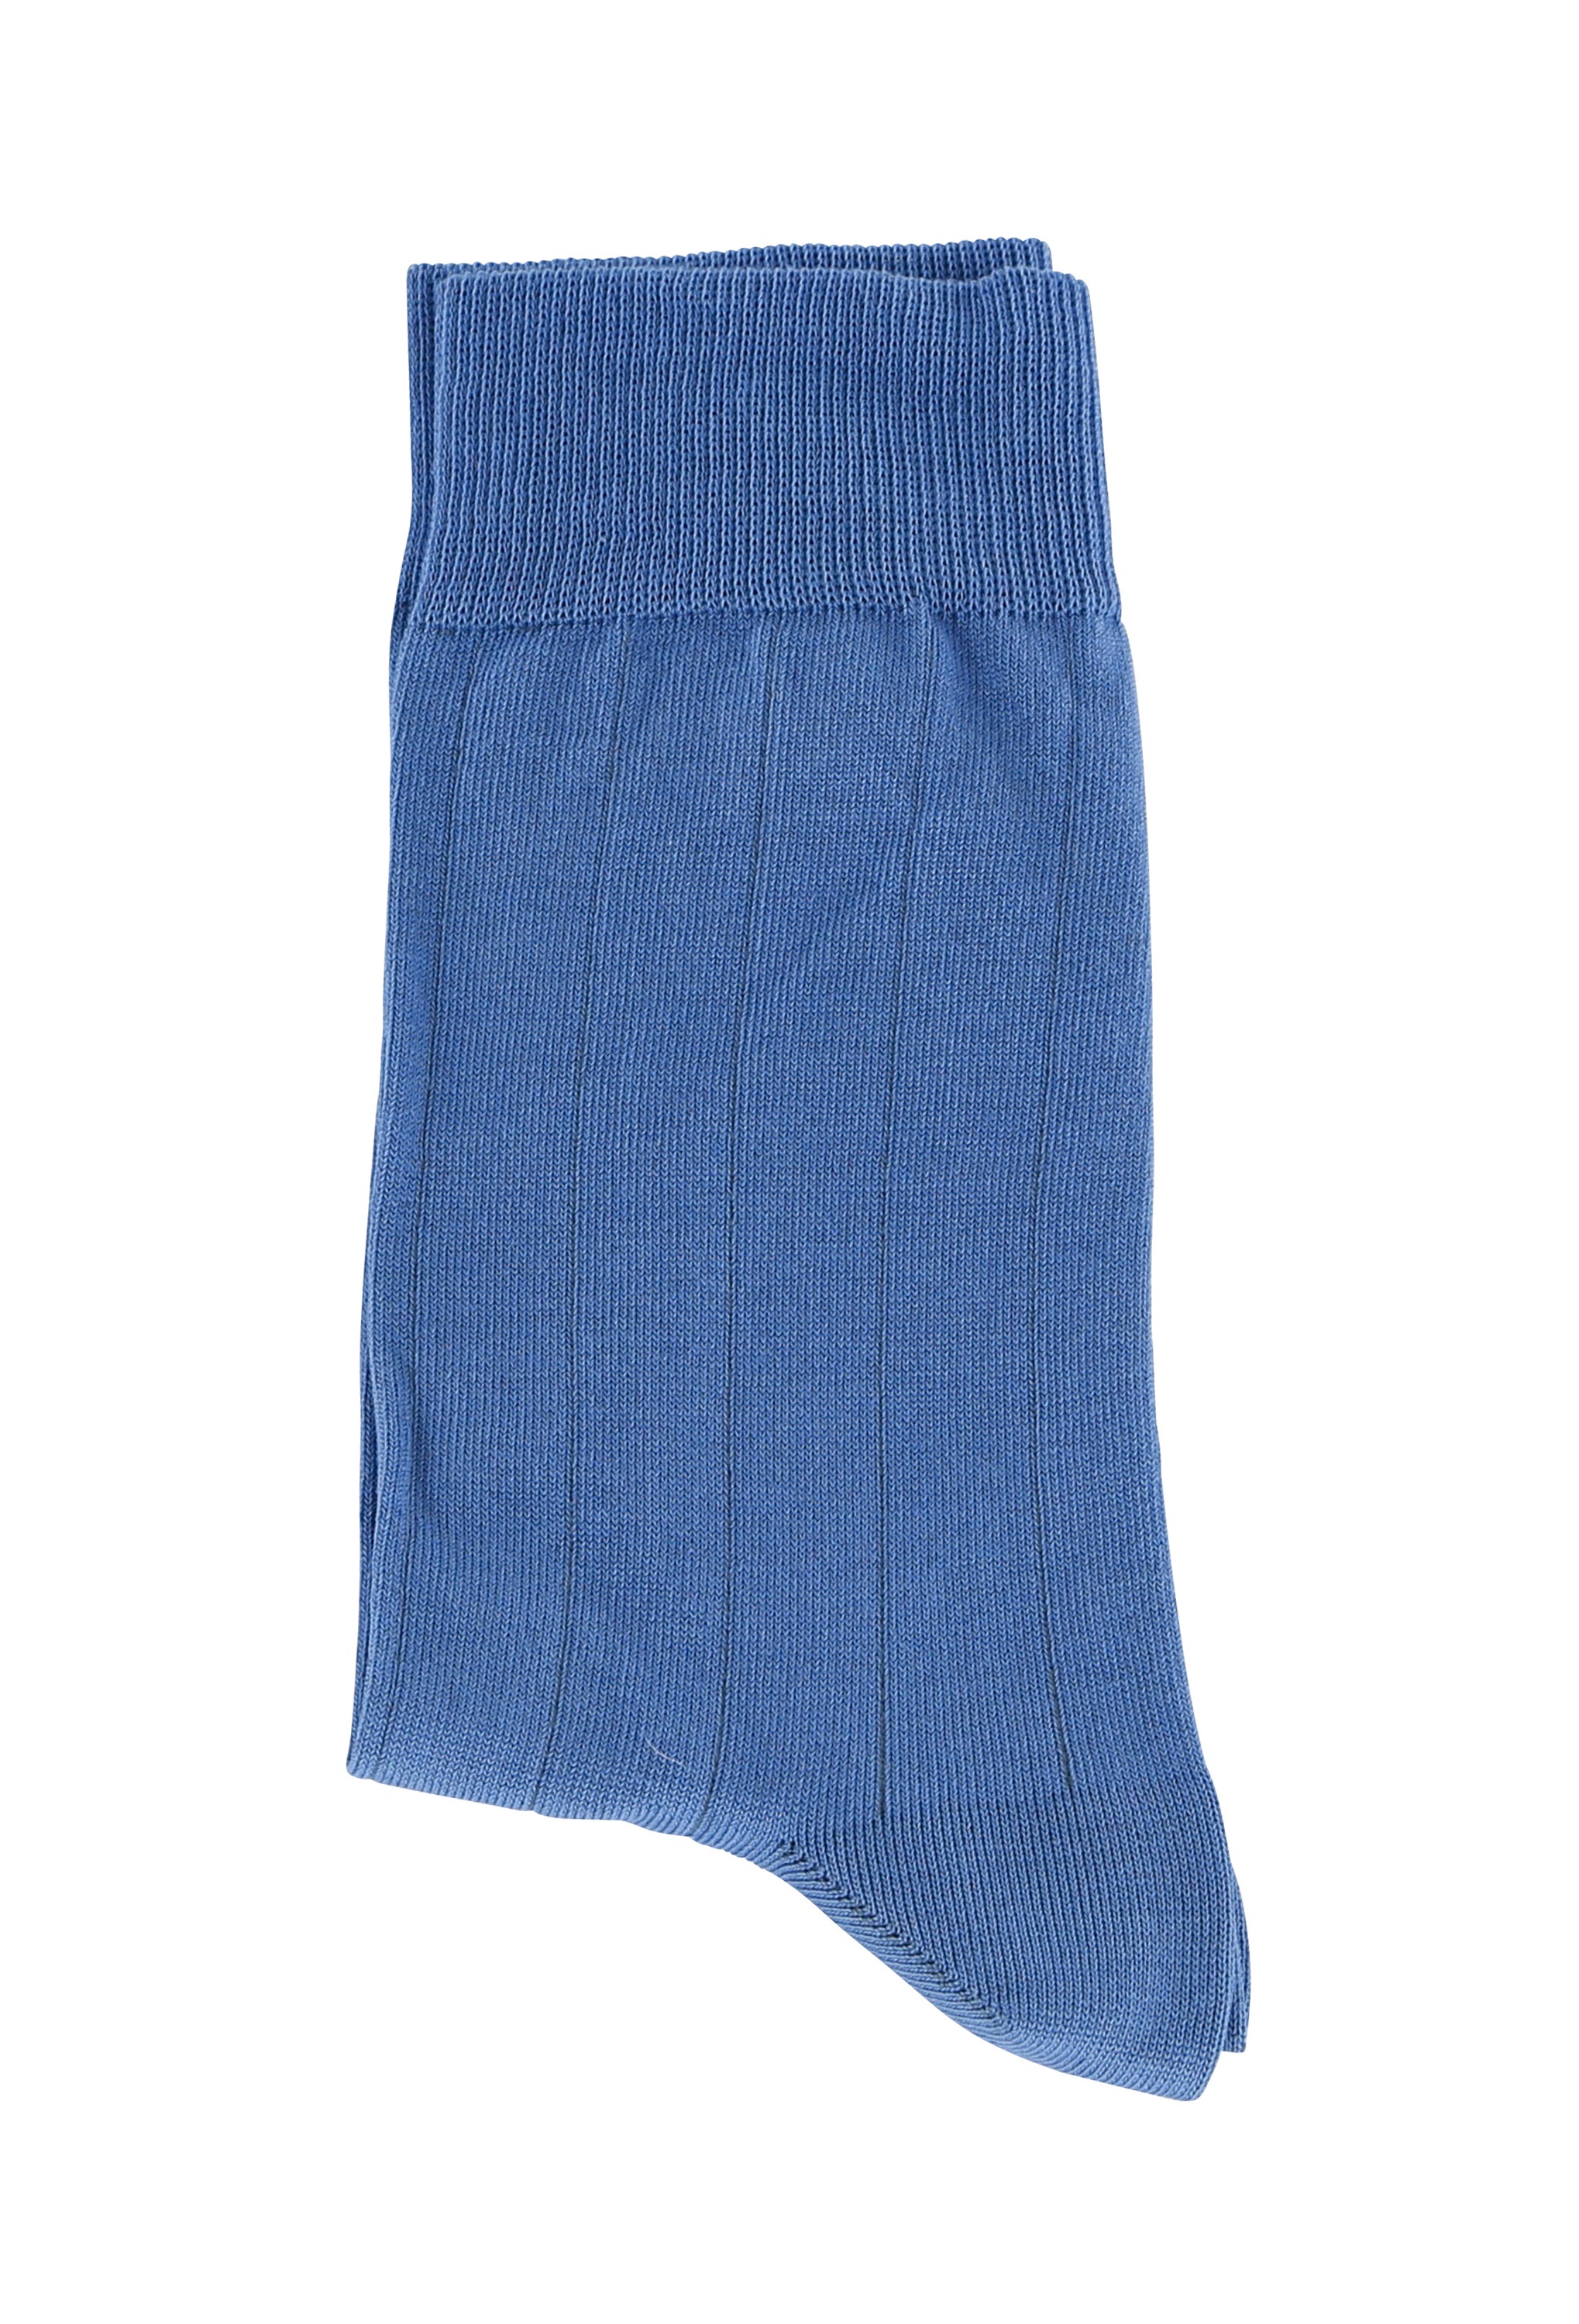 chaussettes fils decosse bleu indigo